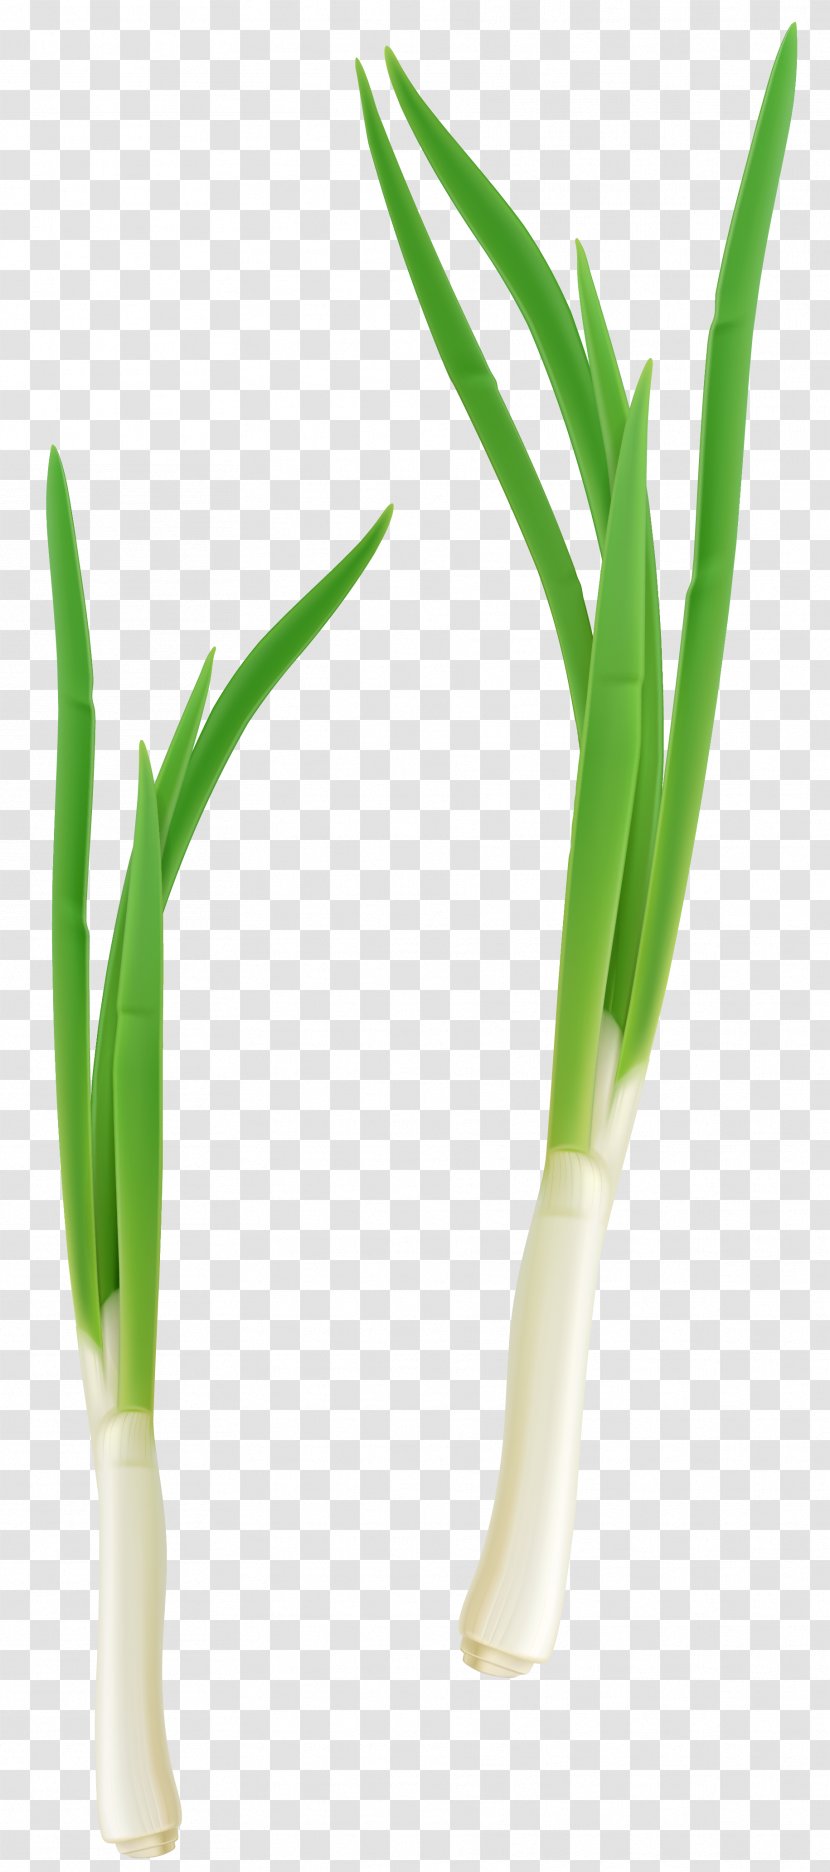 French Onion Soup Shallot Scallion Vegetable Allium Fistulosum - Leaf Transparent PNG